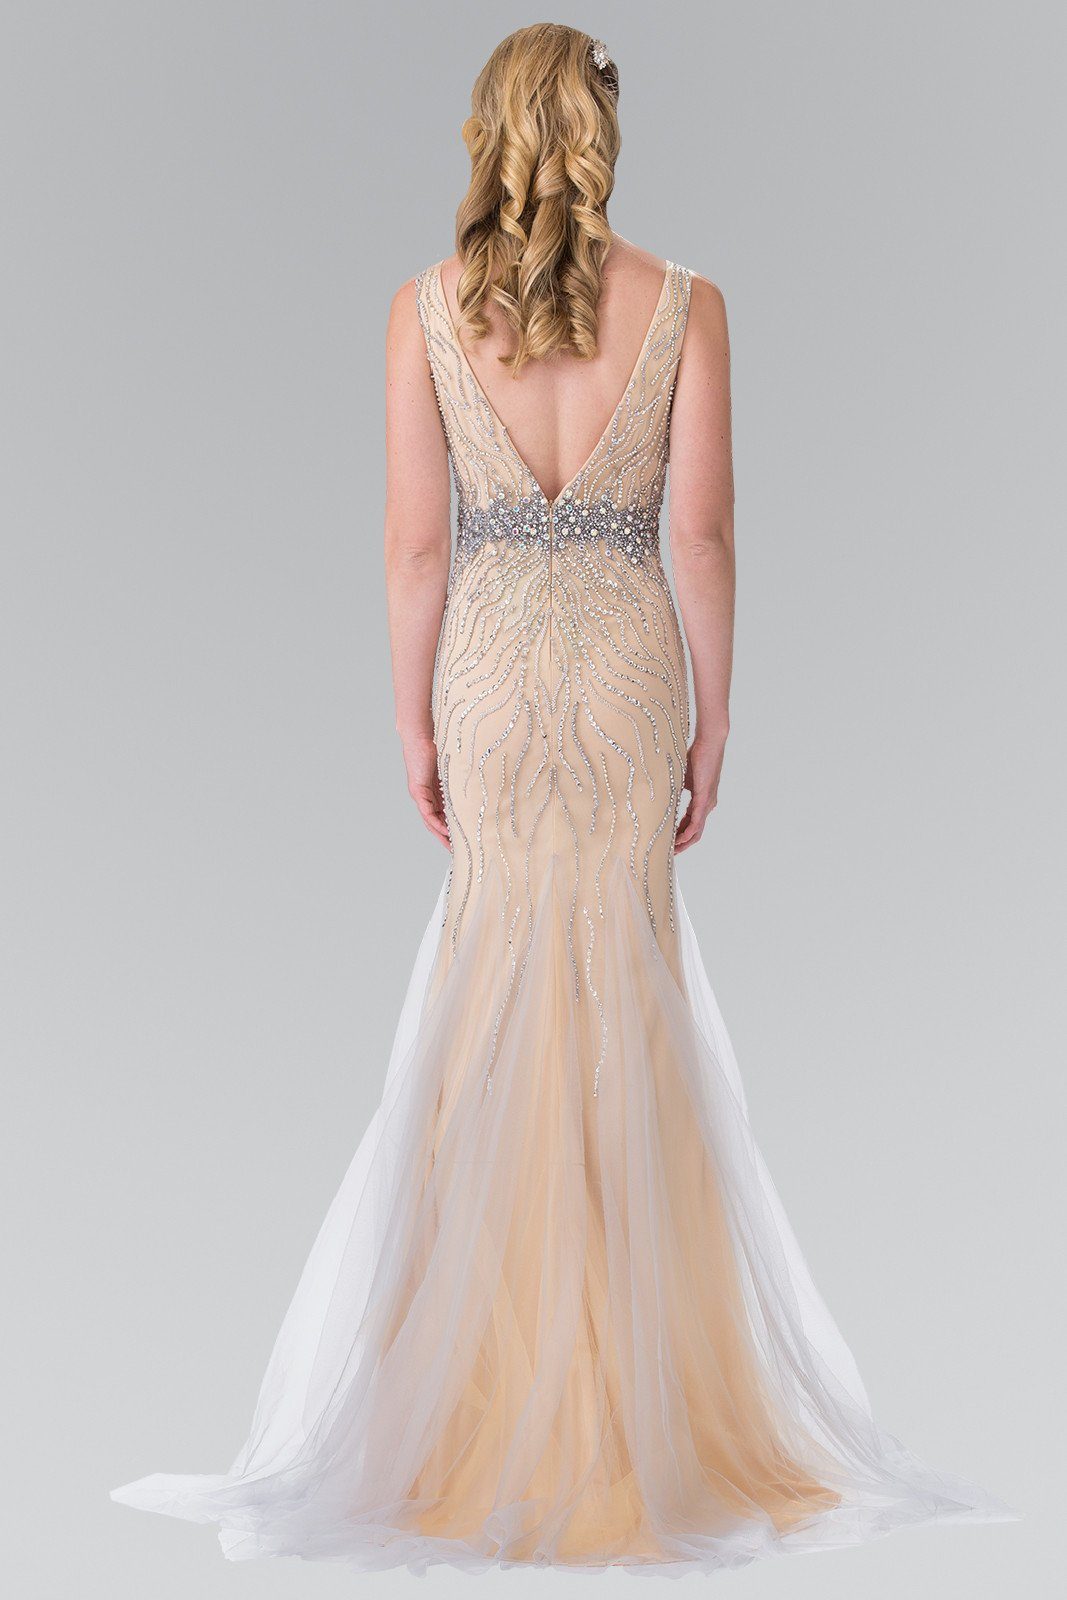 Long Sleeveless Beaded Mermaid Dress by Elizabeth K GL2344-Long Formal Dresses-ABC Fashion